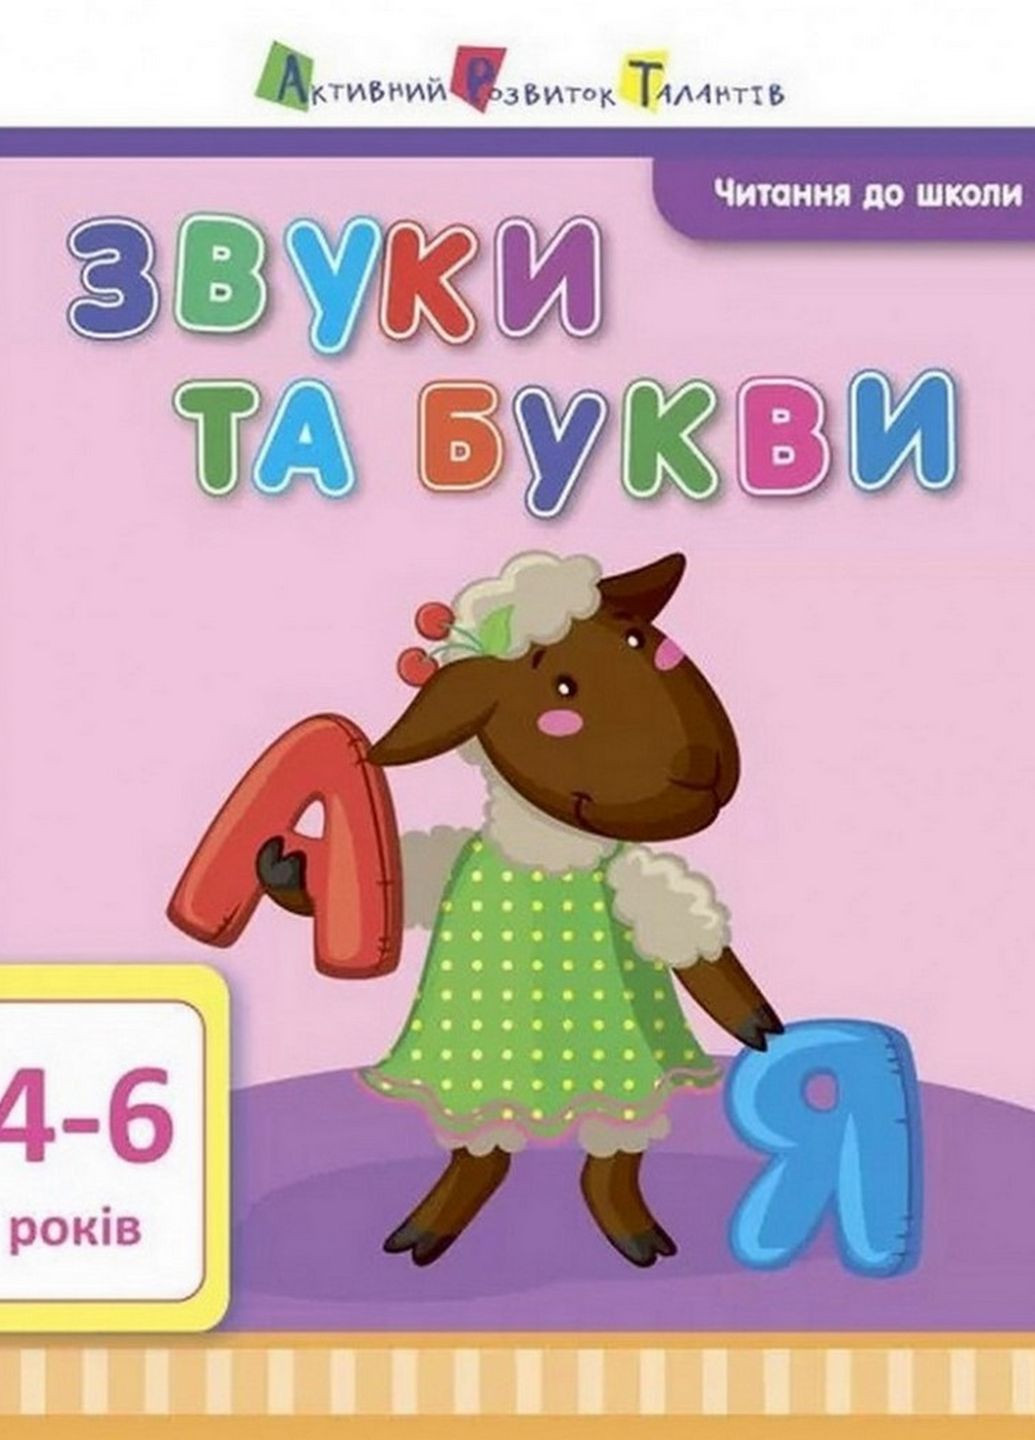 Навчальна книга "Читання до школи: Звуки та букви" АРТ 12601 укр Ranok Creative (276776636)